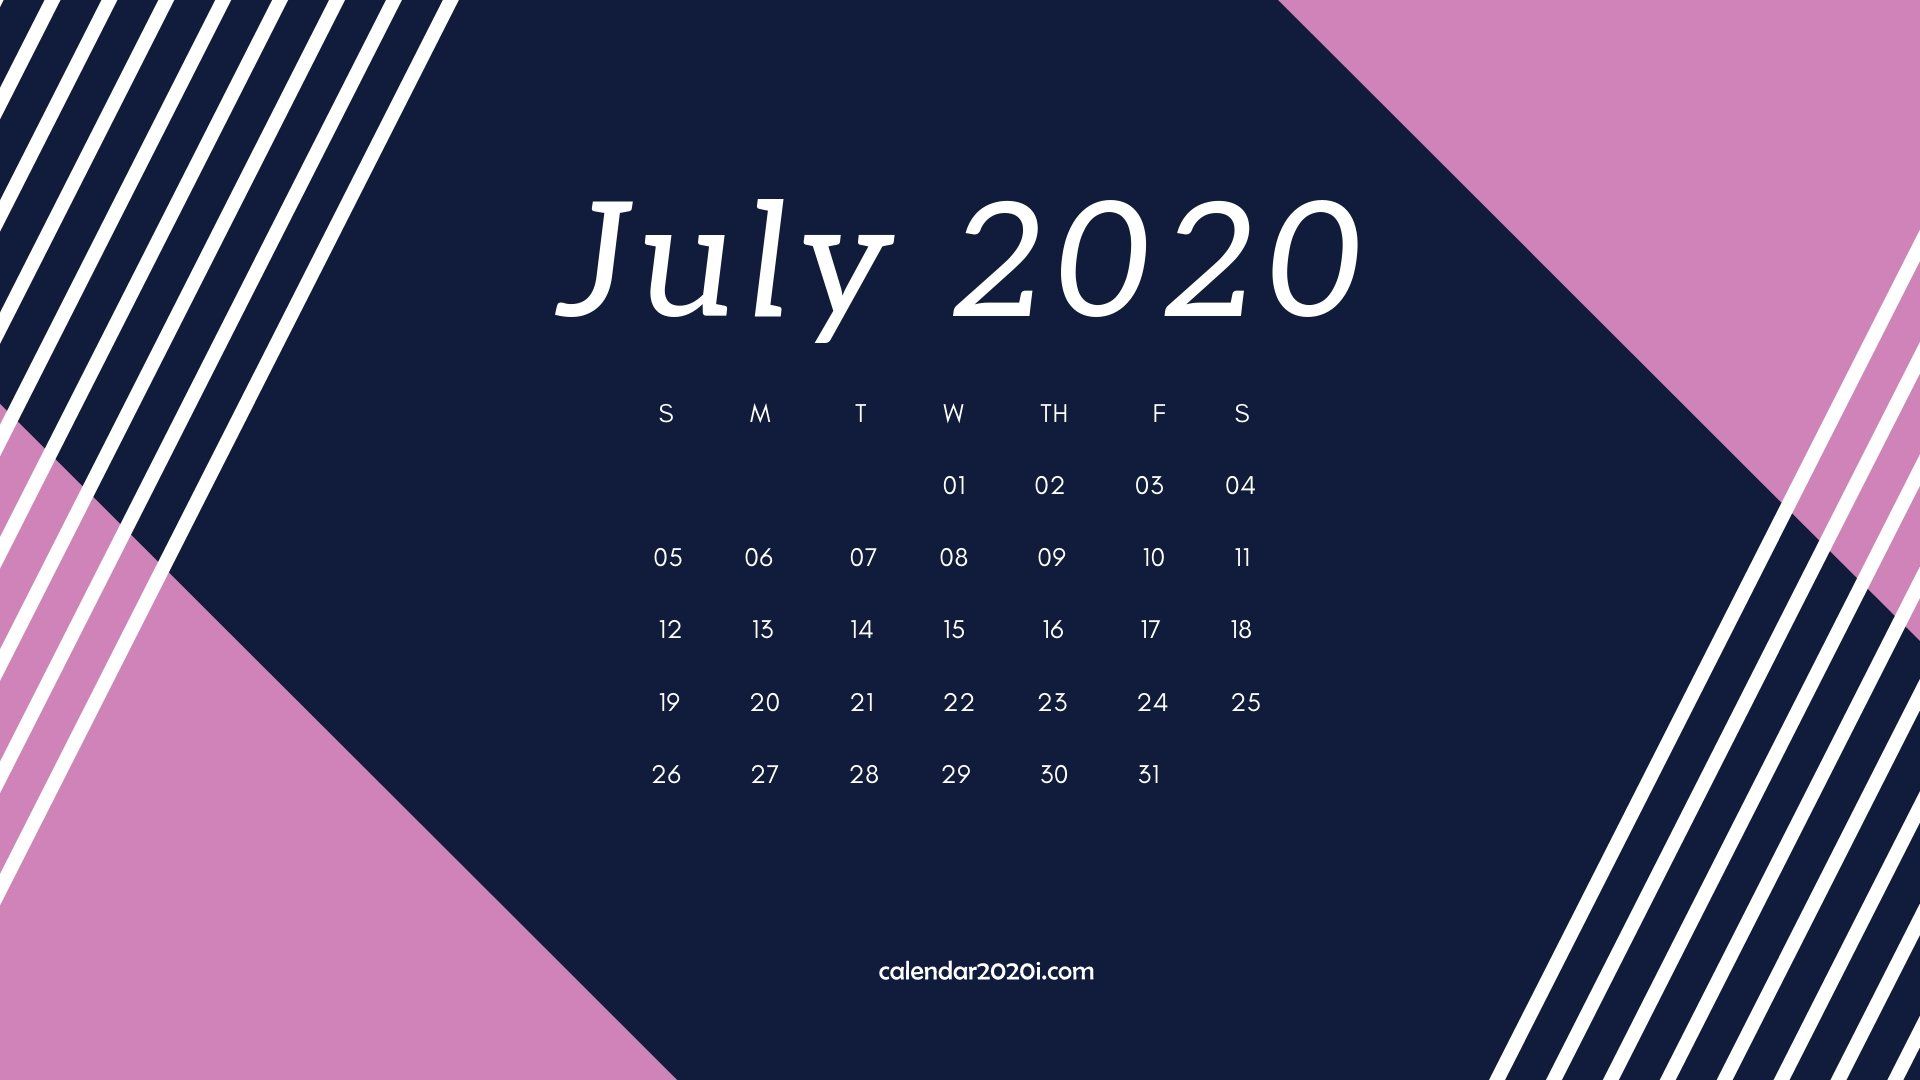 July 2020 Calendar Desktop Wallpaper in 2019 Calendar Printable 1920x1080